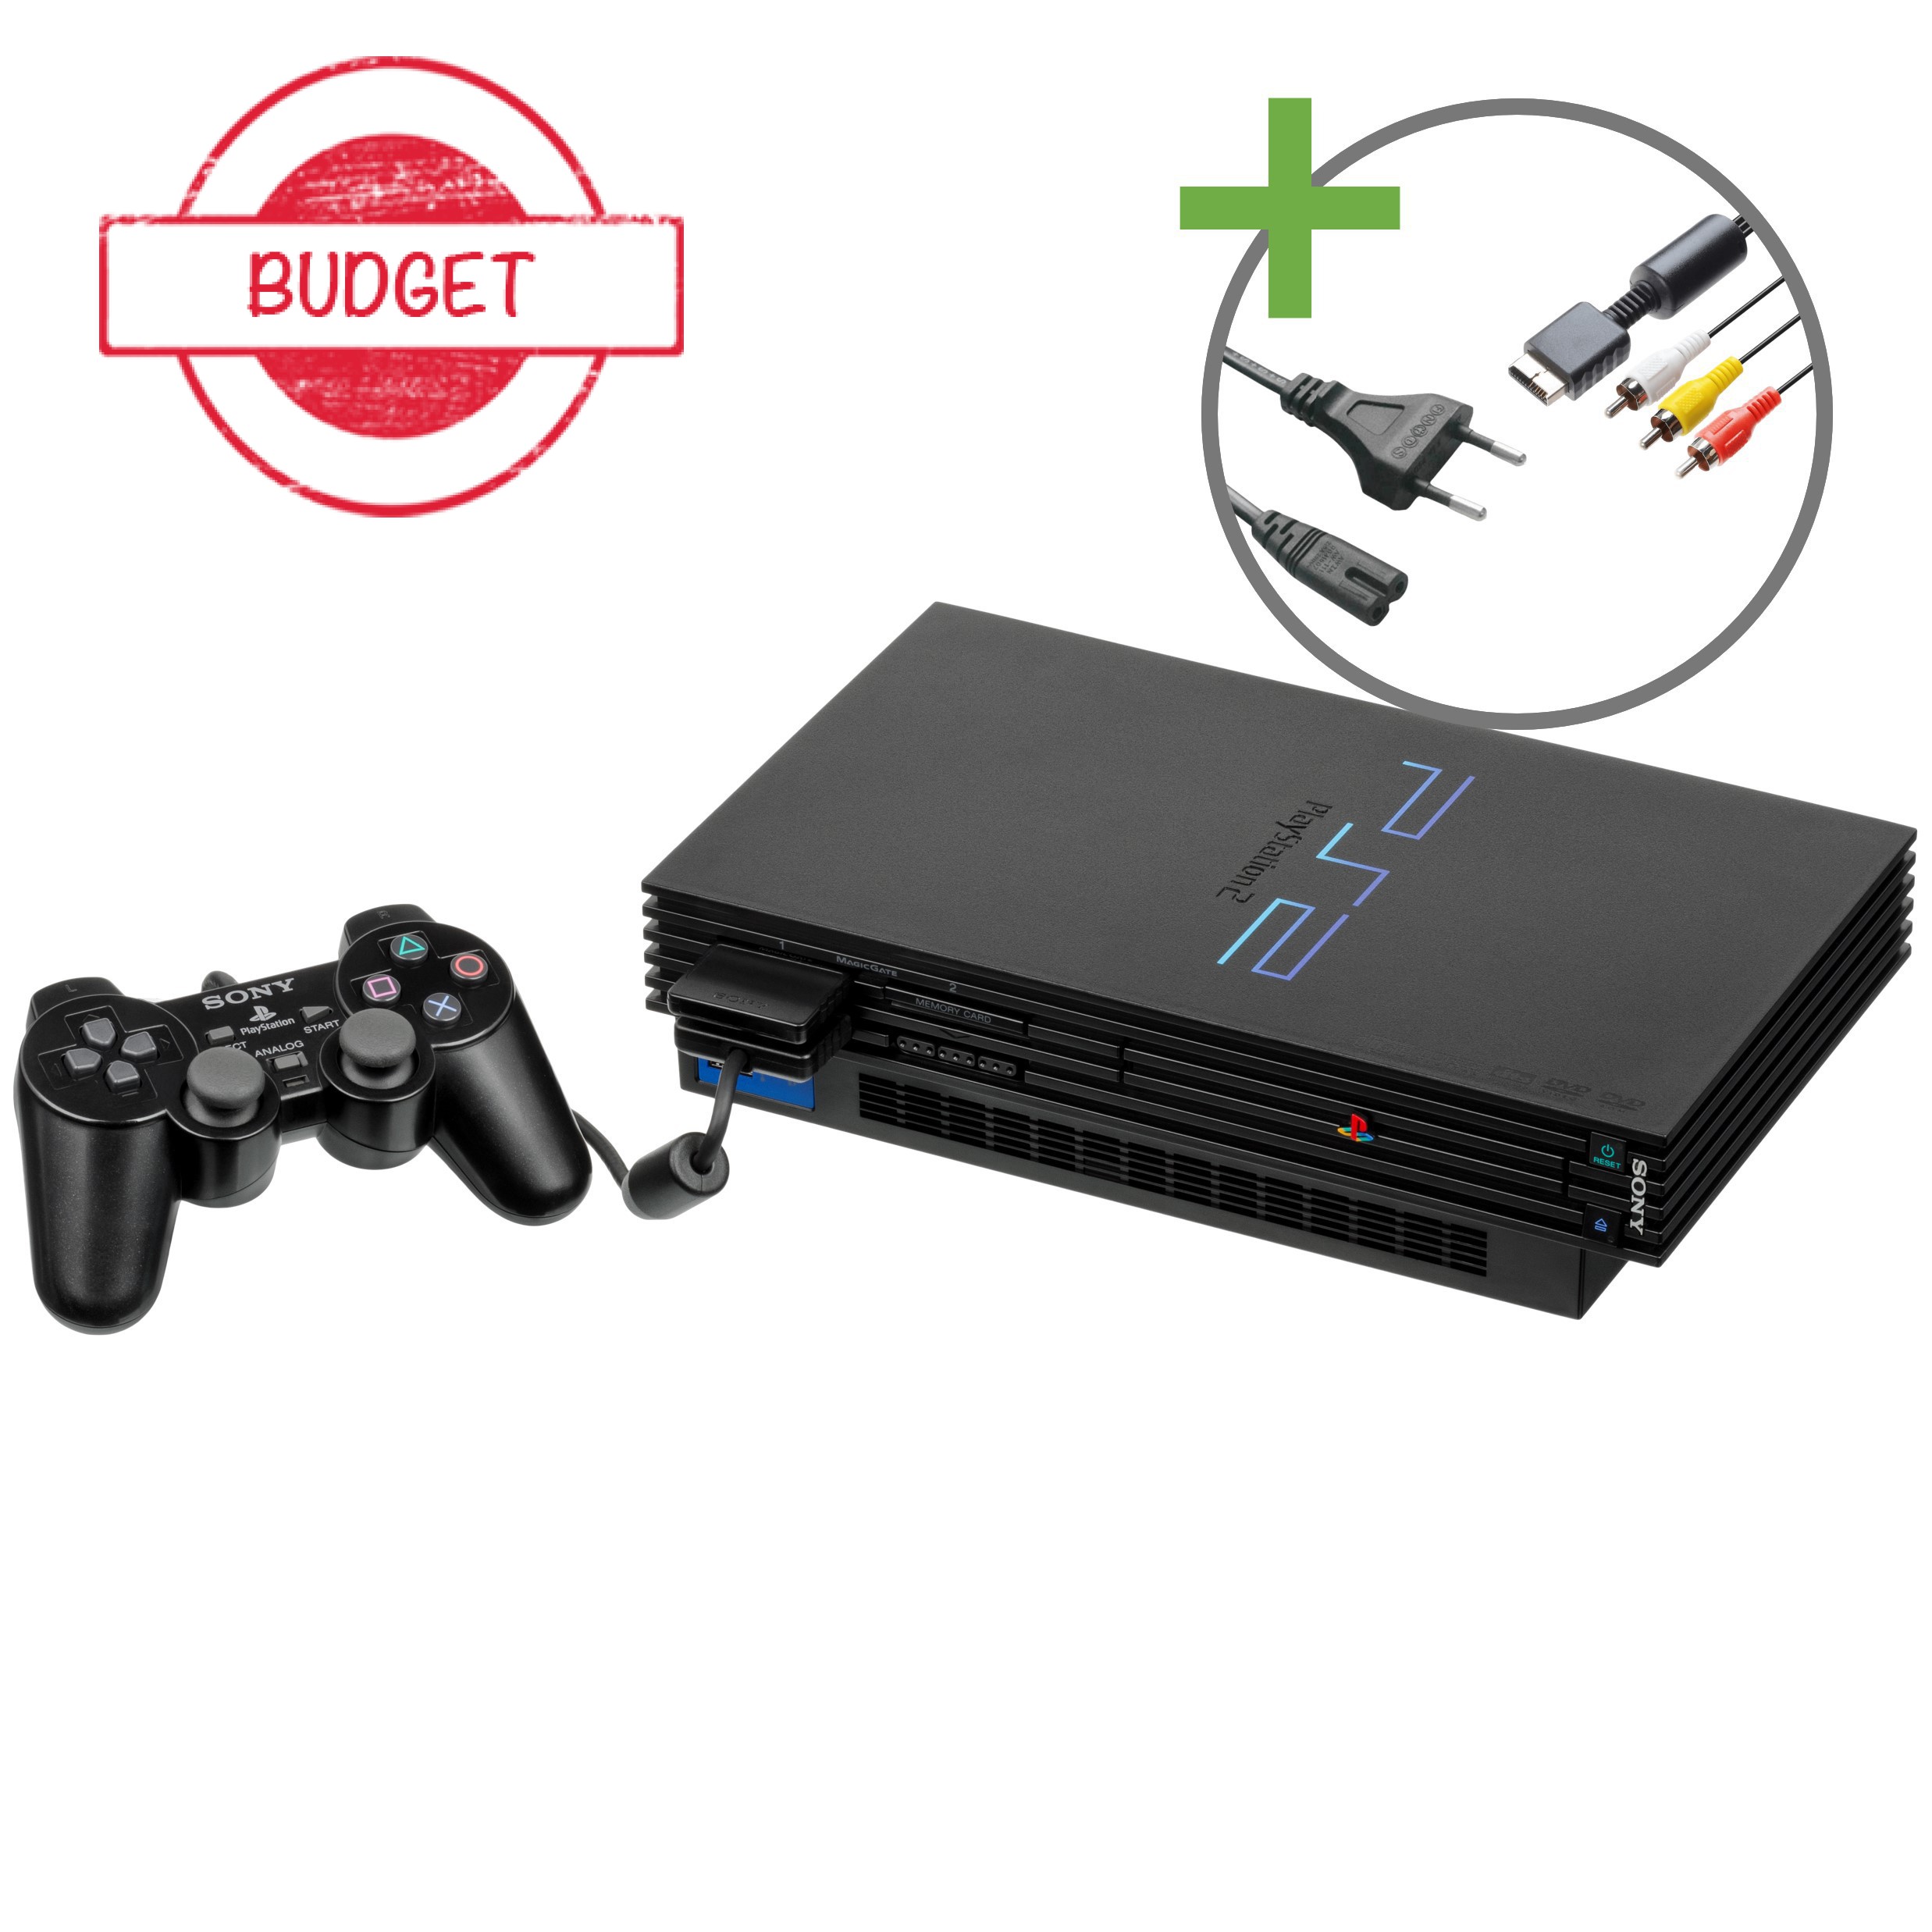 Sony PlayStation 2 Phat Starter Pack - Black Edition - Budget - Playstation 2 Hardware - 2